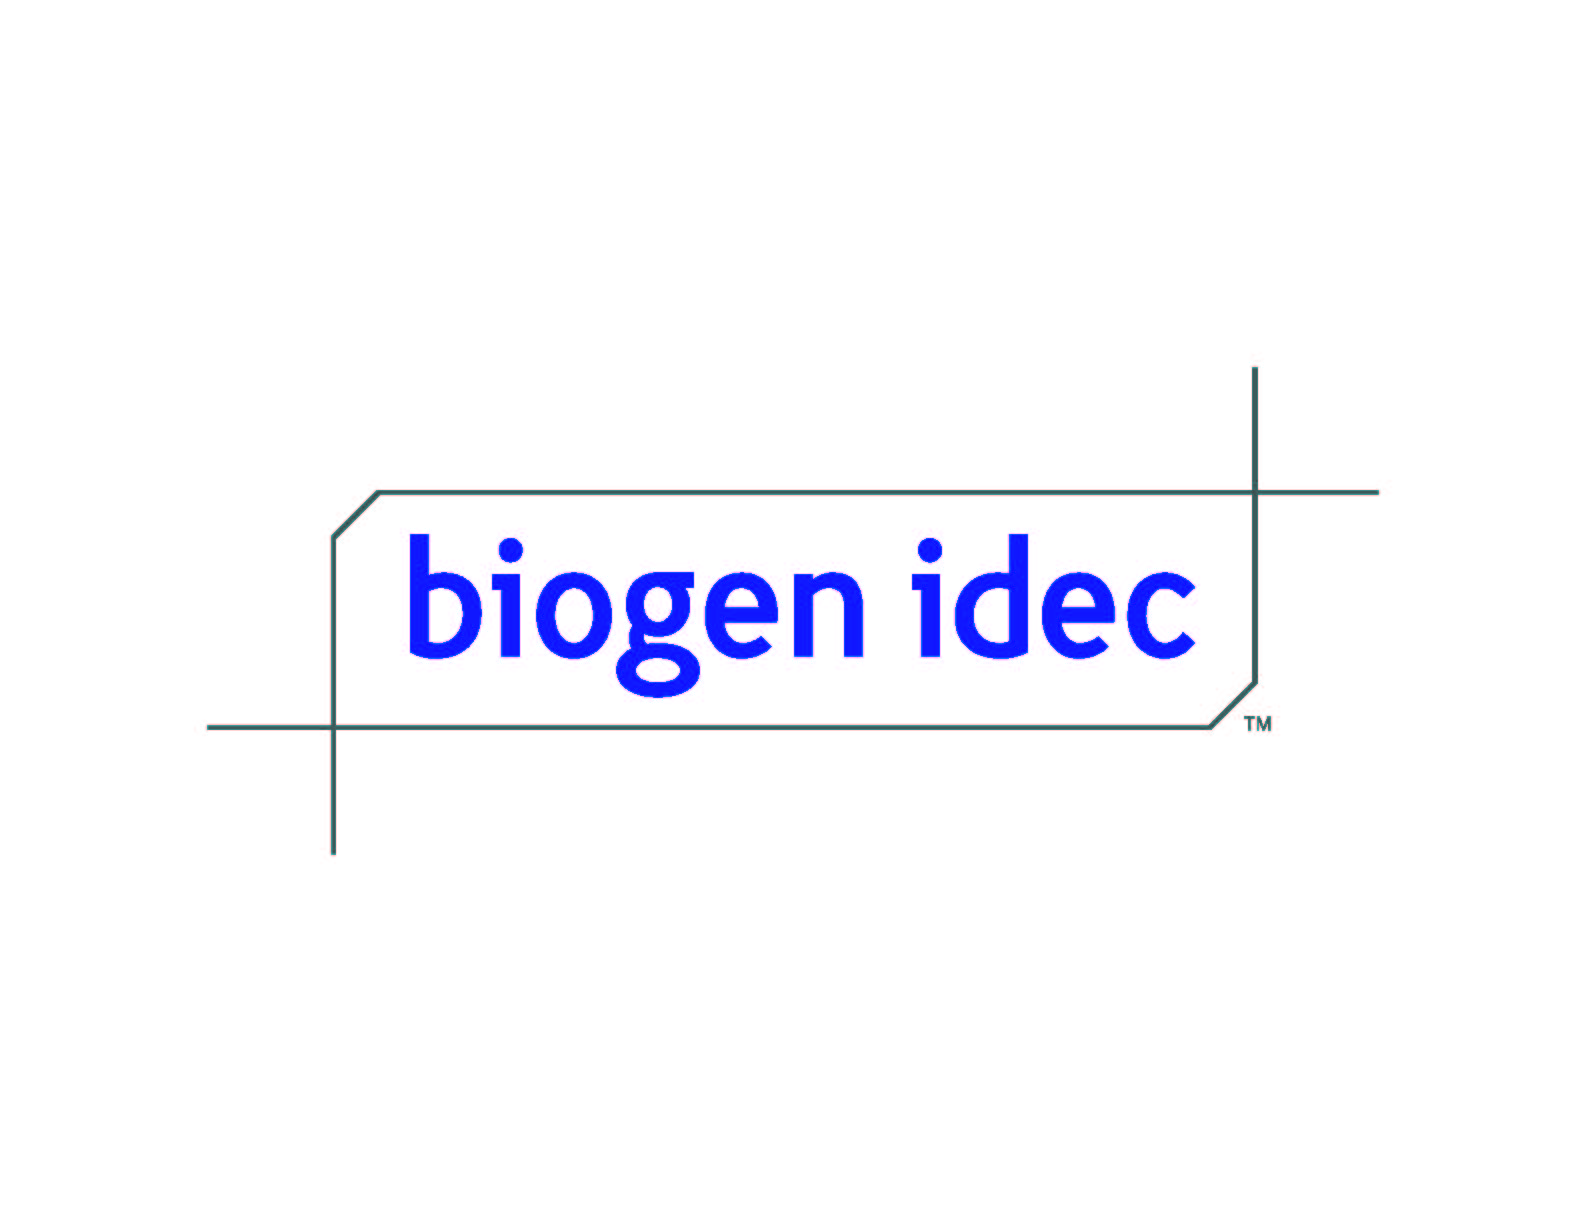 mdm biogen logo